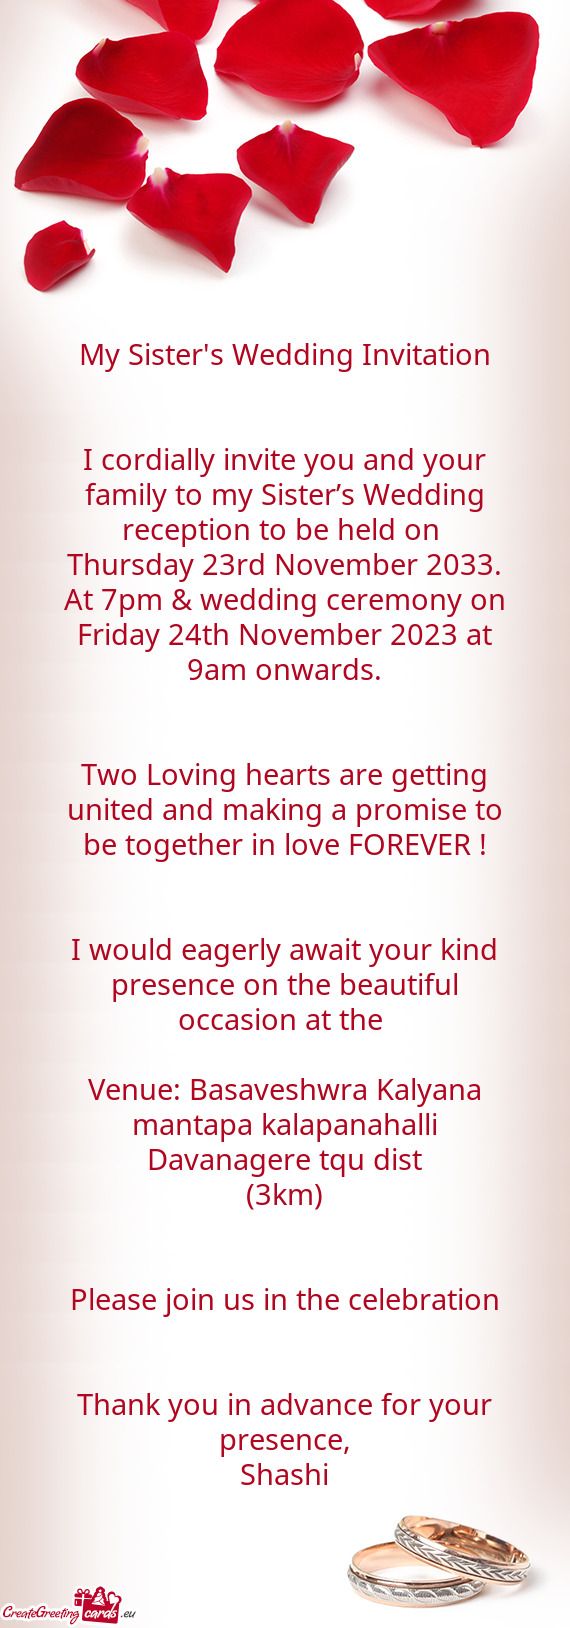 Thursday 23rd November 2033. At 7pm & wedding ceremony on Friday 24th November 2023 at 9am onwards